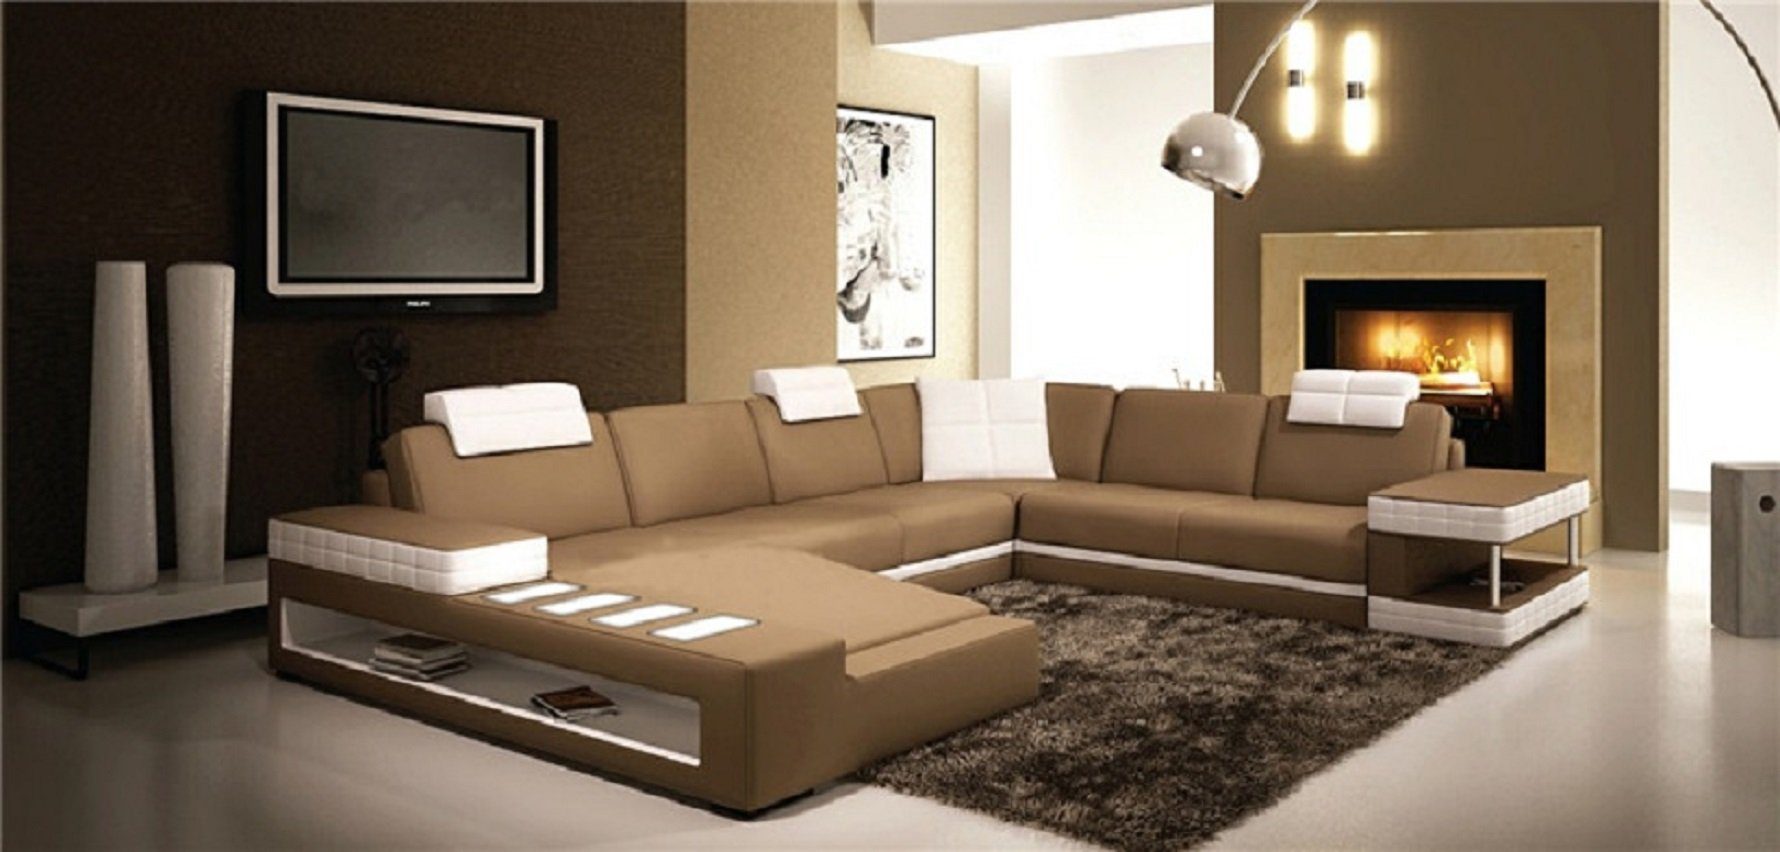 JVmoebel Ecksofa U Form Sofa Polster Braun/Weiß Luxus Leder Wohnlandschaft Couch Design Ecksofa